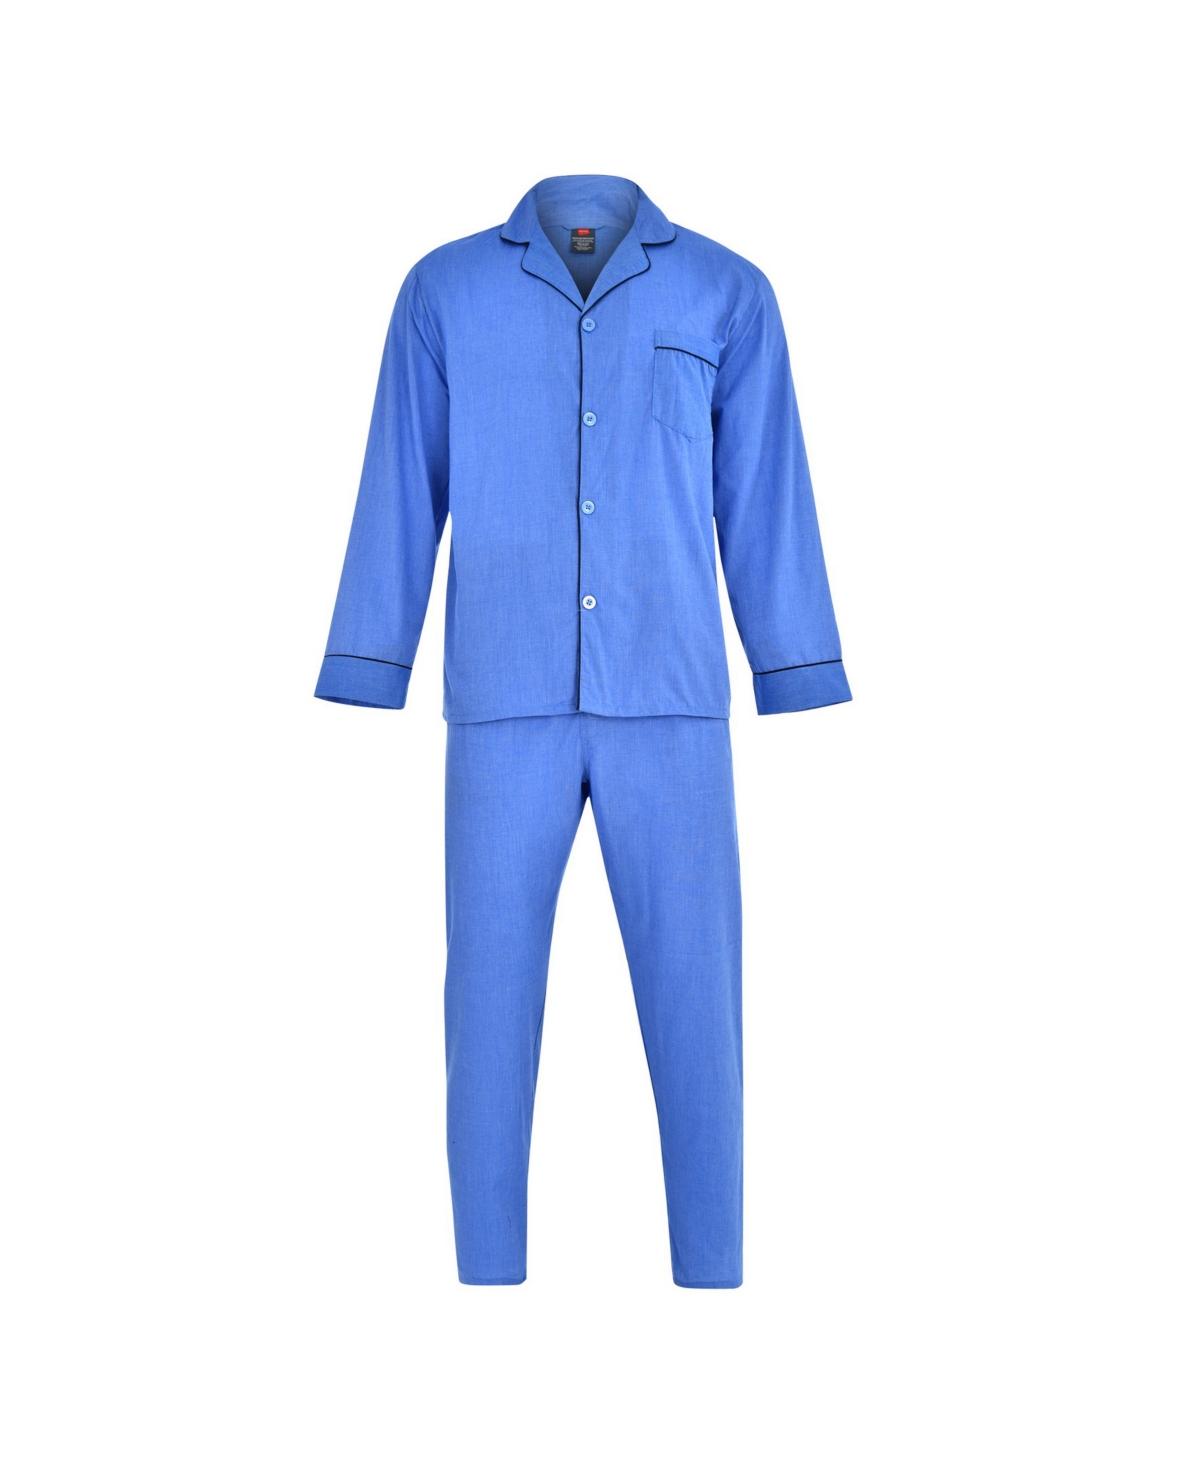 Hanes Men's Big and Tall Cvc Broadcloth Pajama Set - Blue Plaid